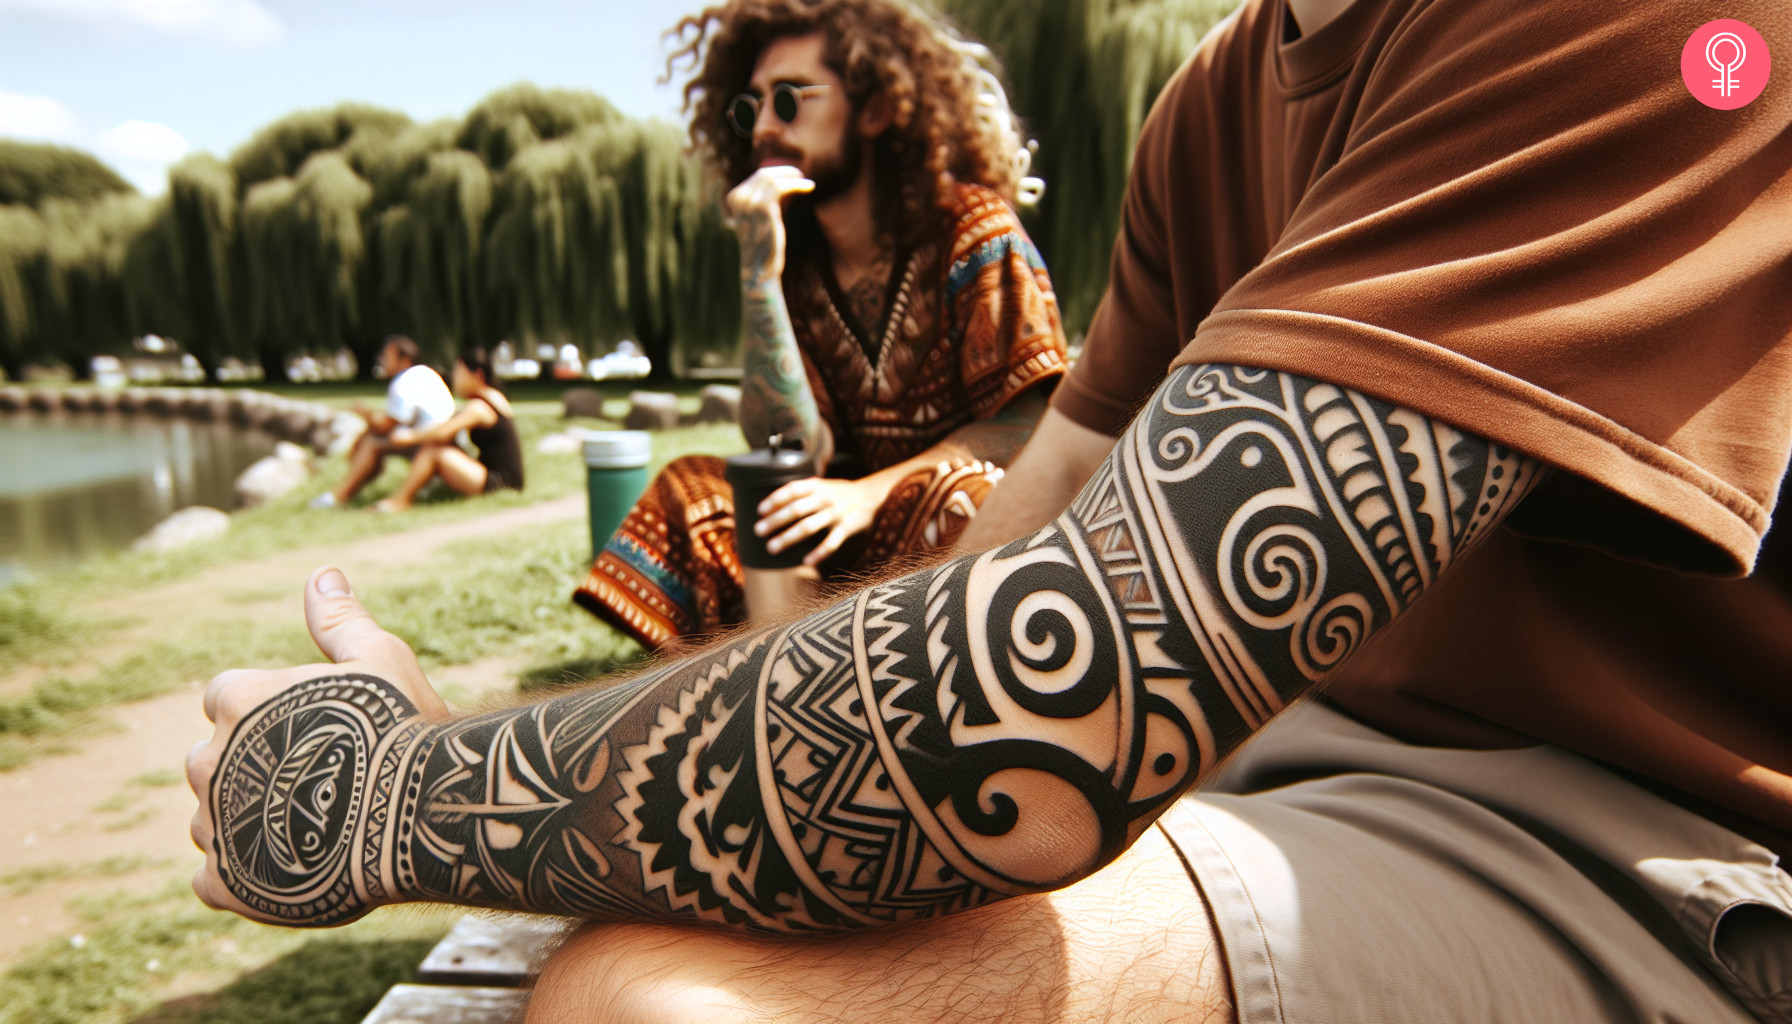 Full sleeve maori tattoo on a man